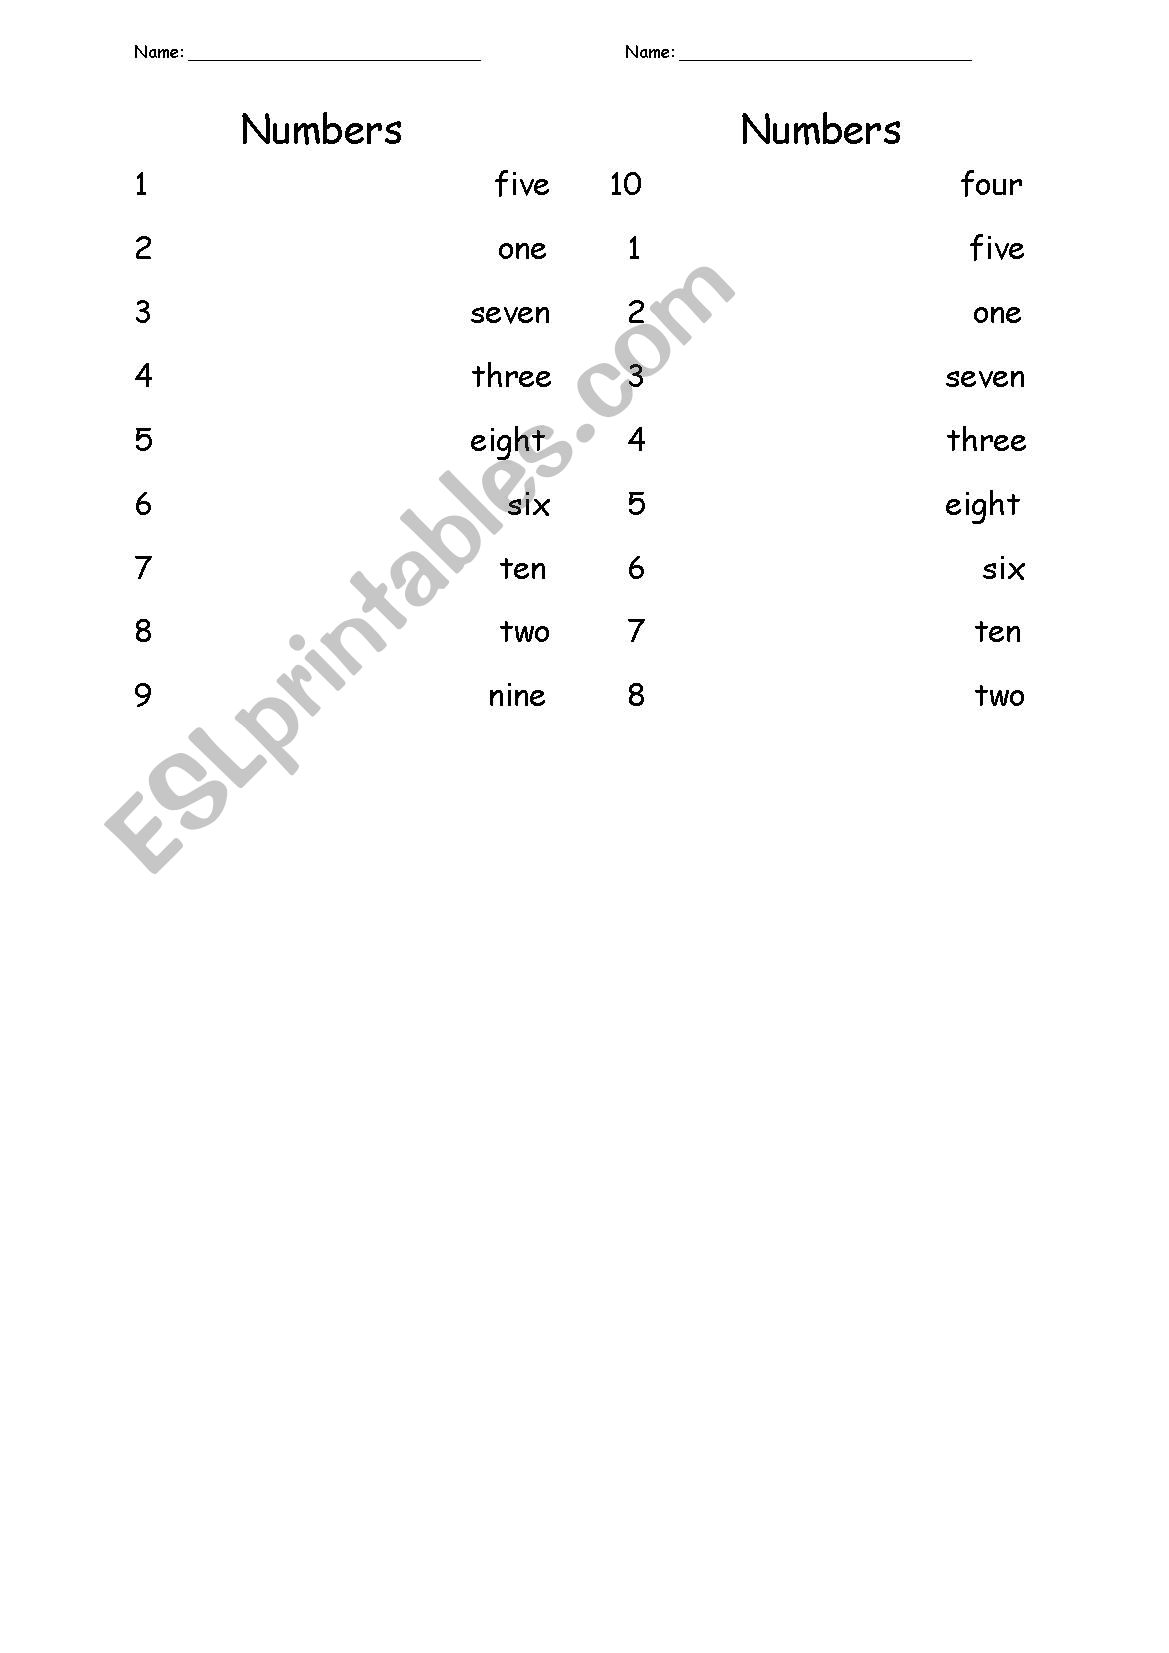 Numbers 1-10 Matching Worksheet